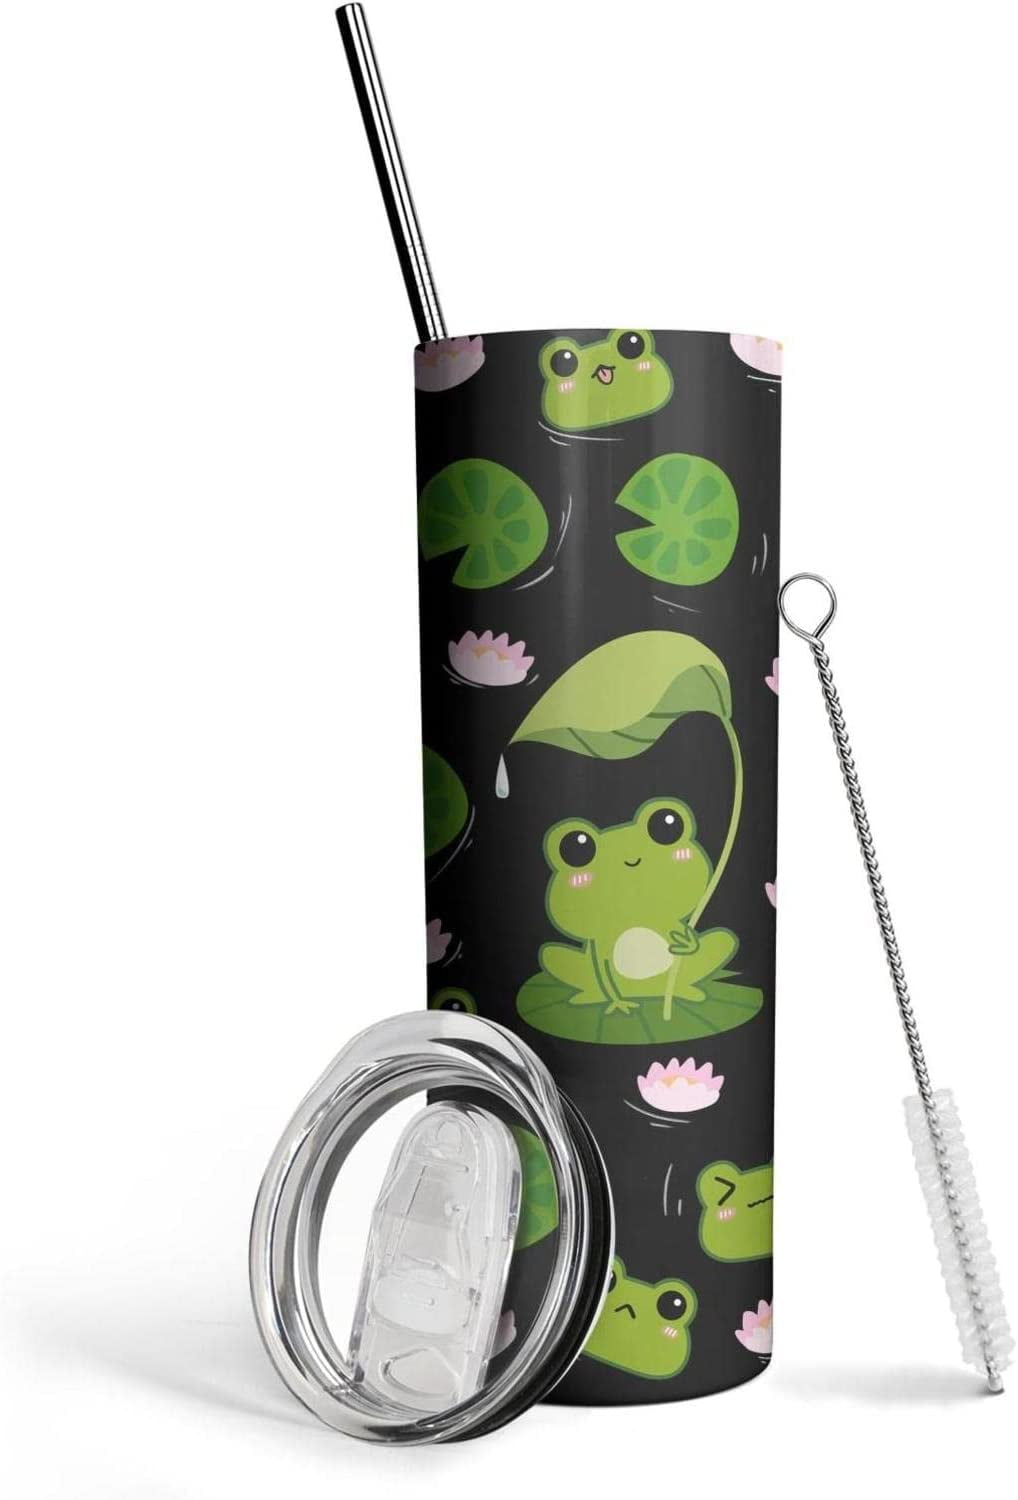 Frog Stuff-Frog Gifts for Women-Frog Cup/Coffee Mug/Water Bottle